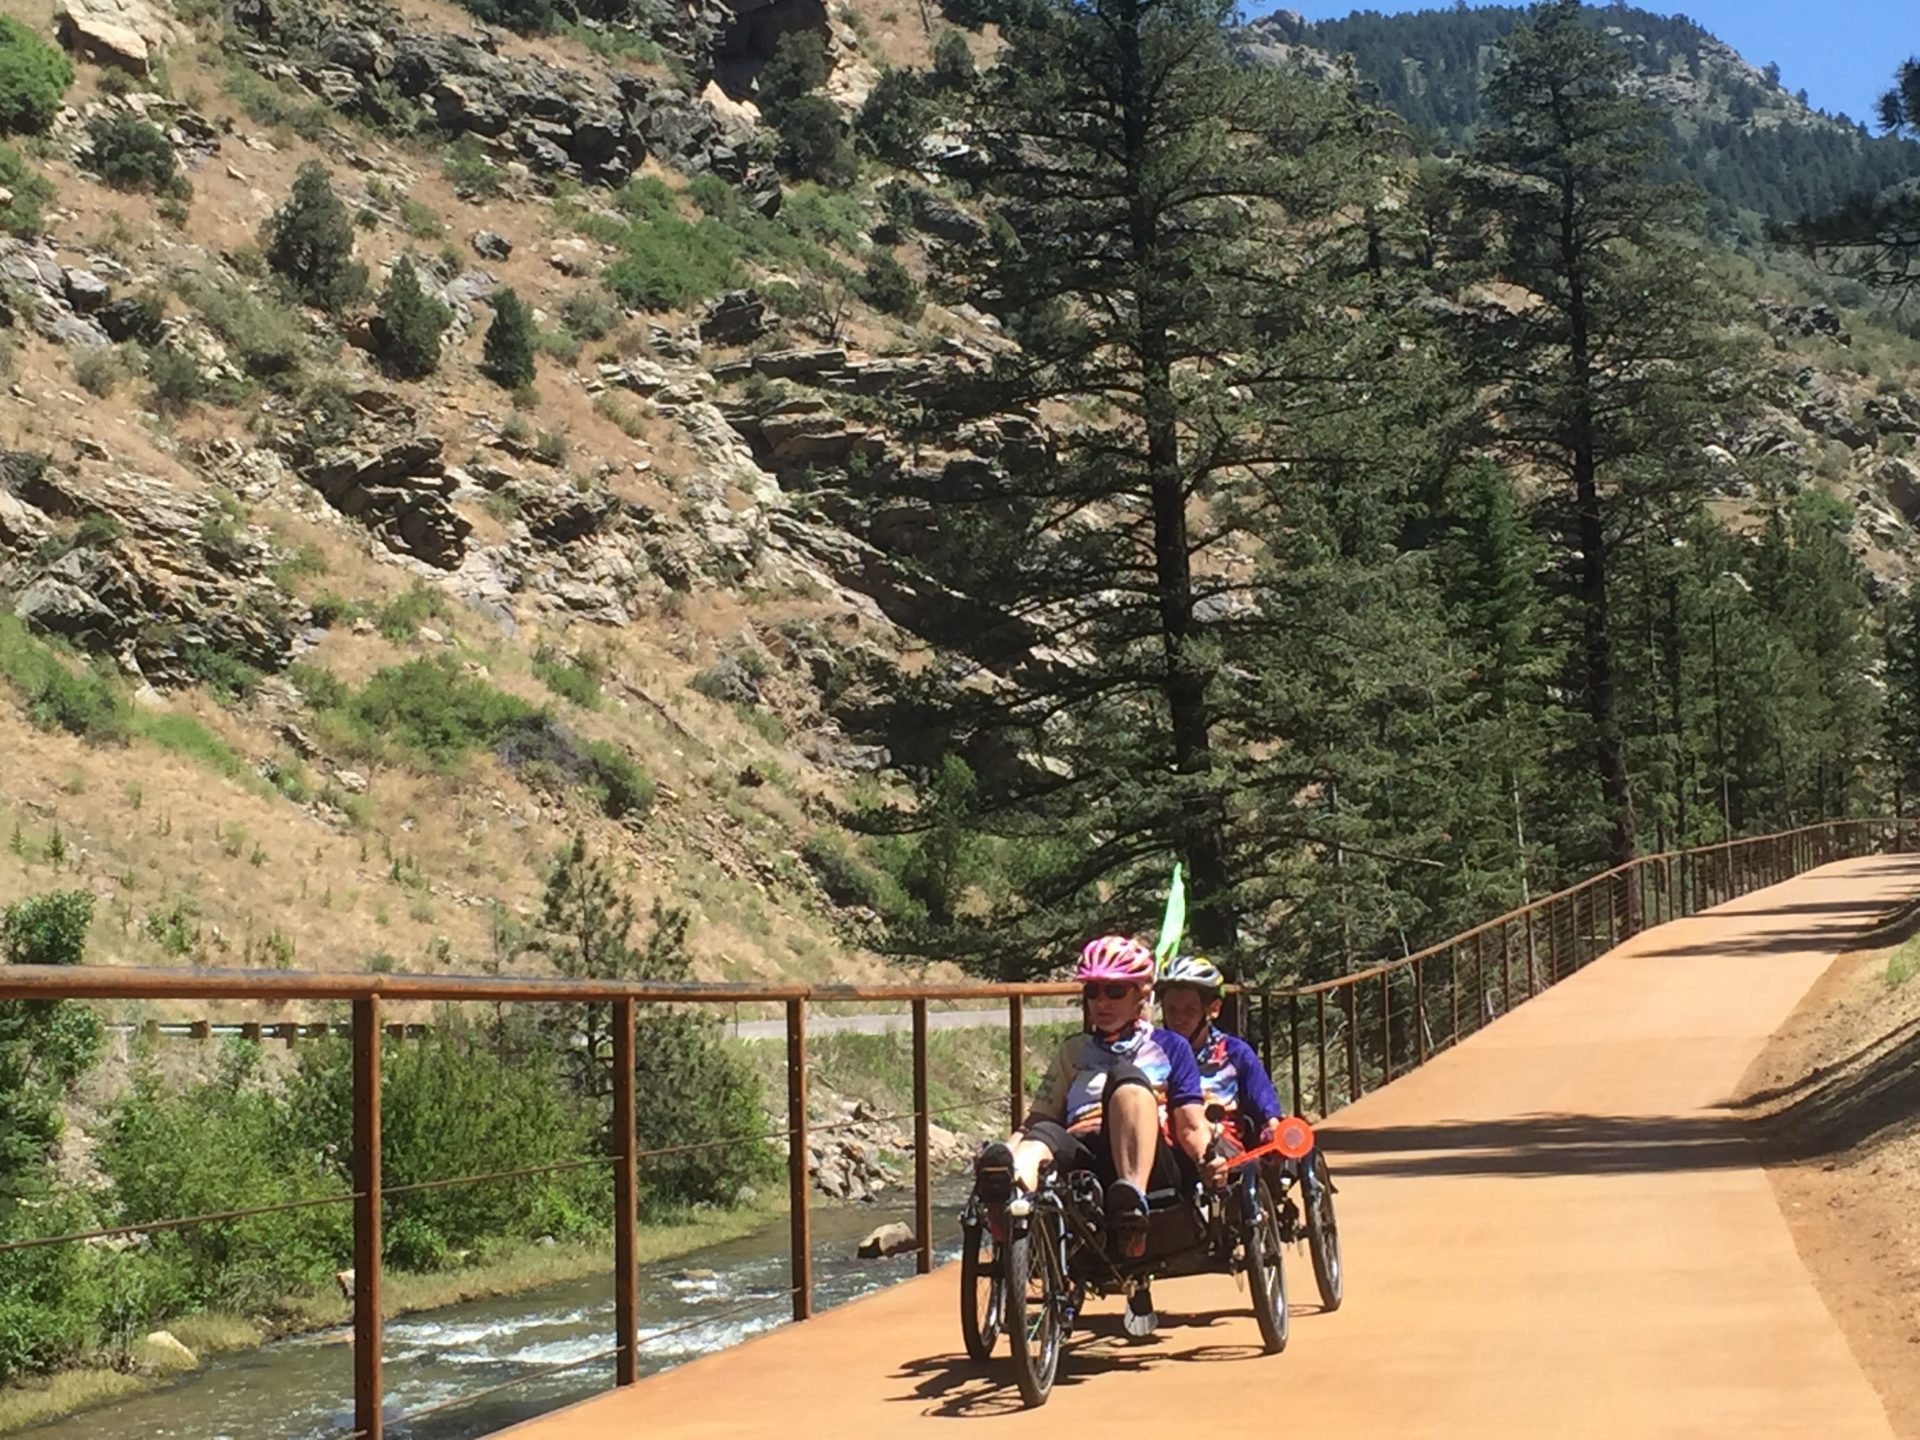 Recumbent bike riders on the Clear Creek Trail